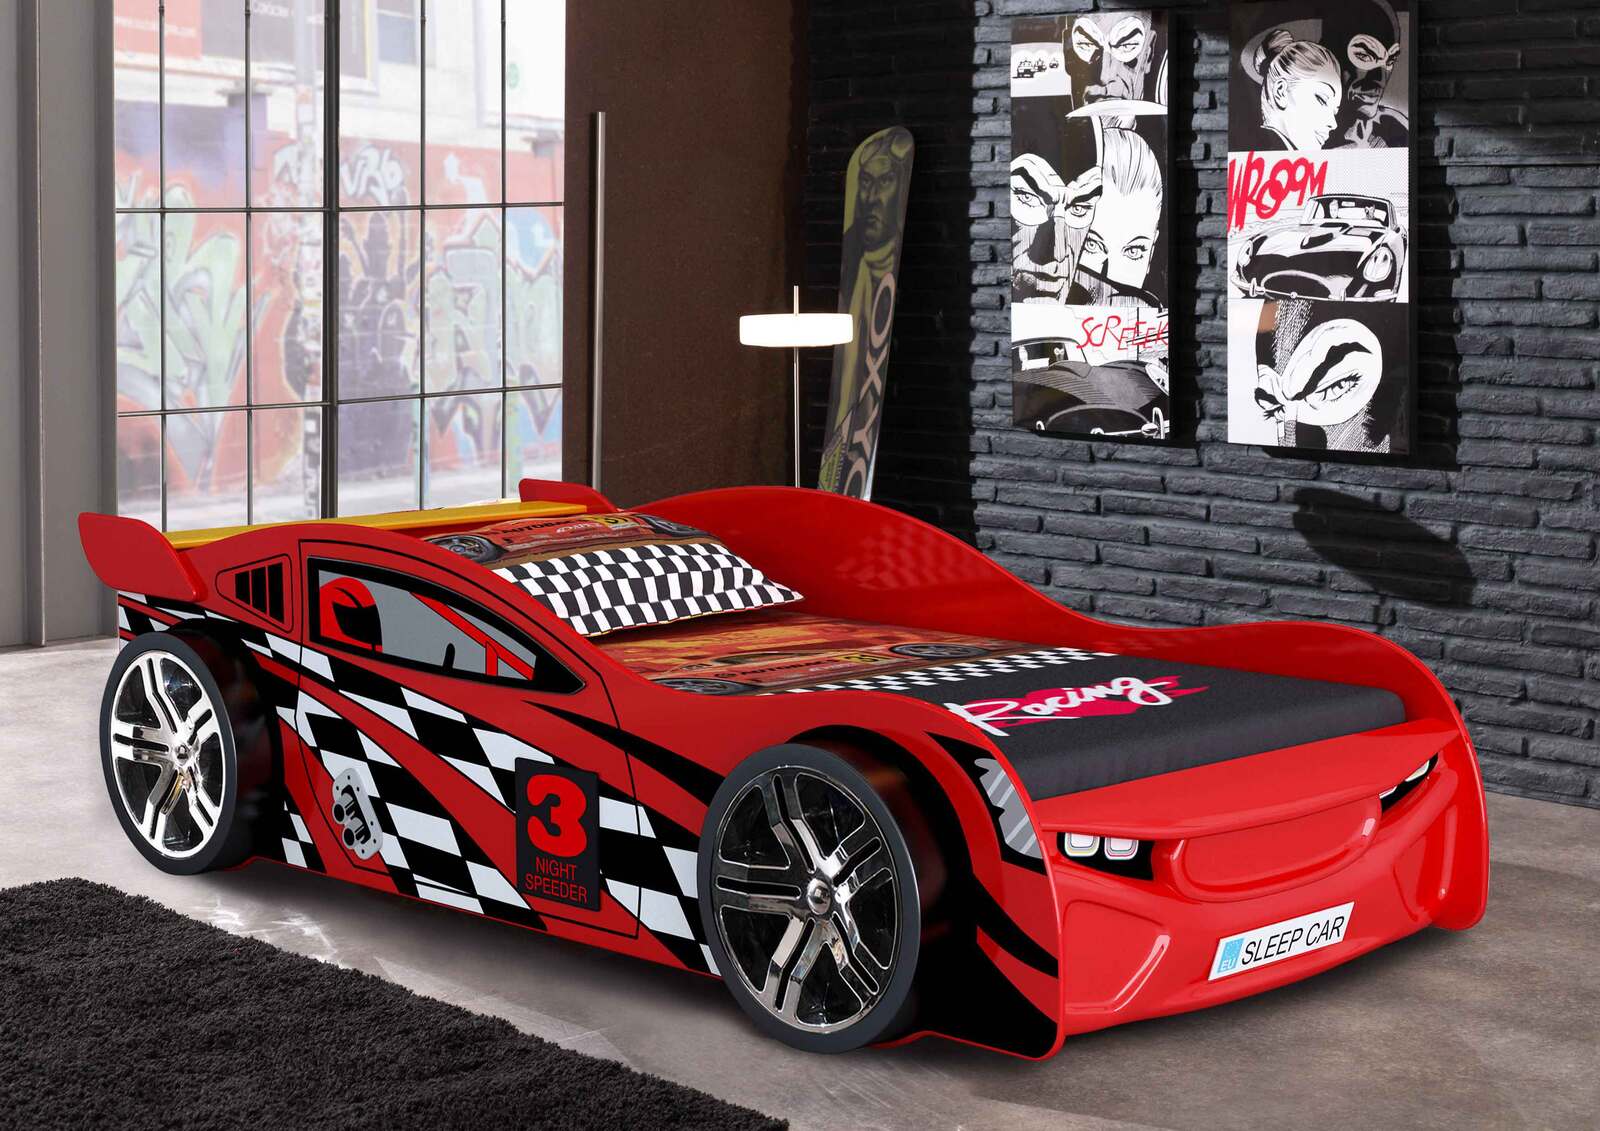 Night Speeder Car Bed Single